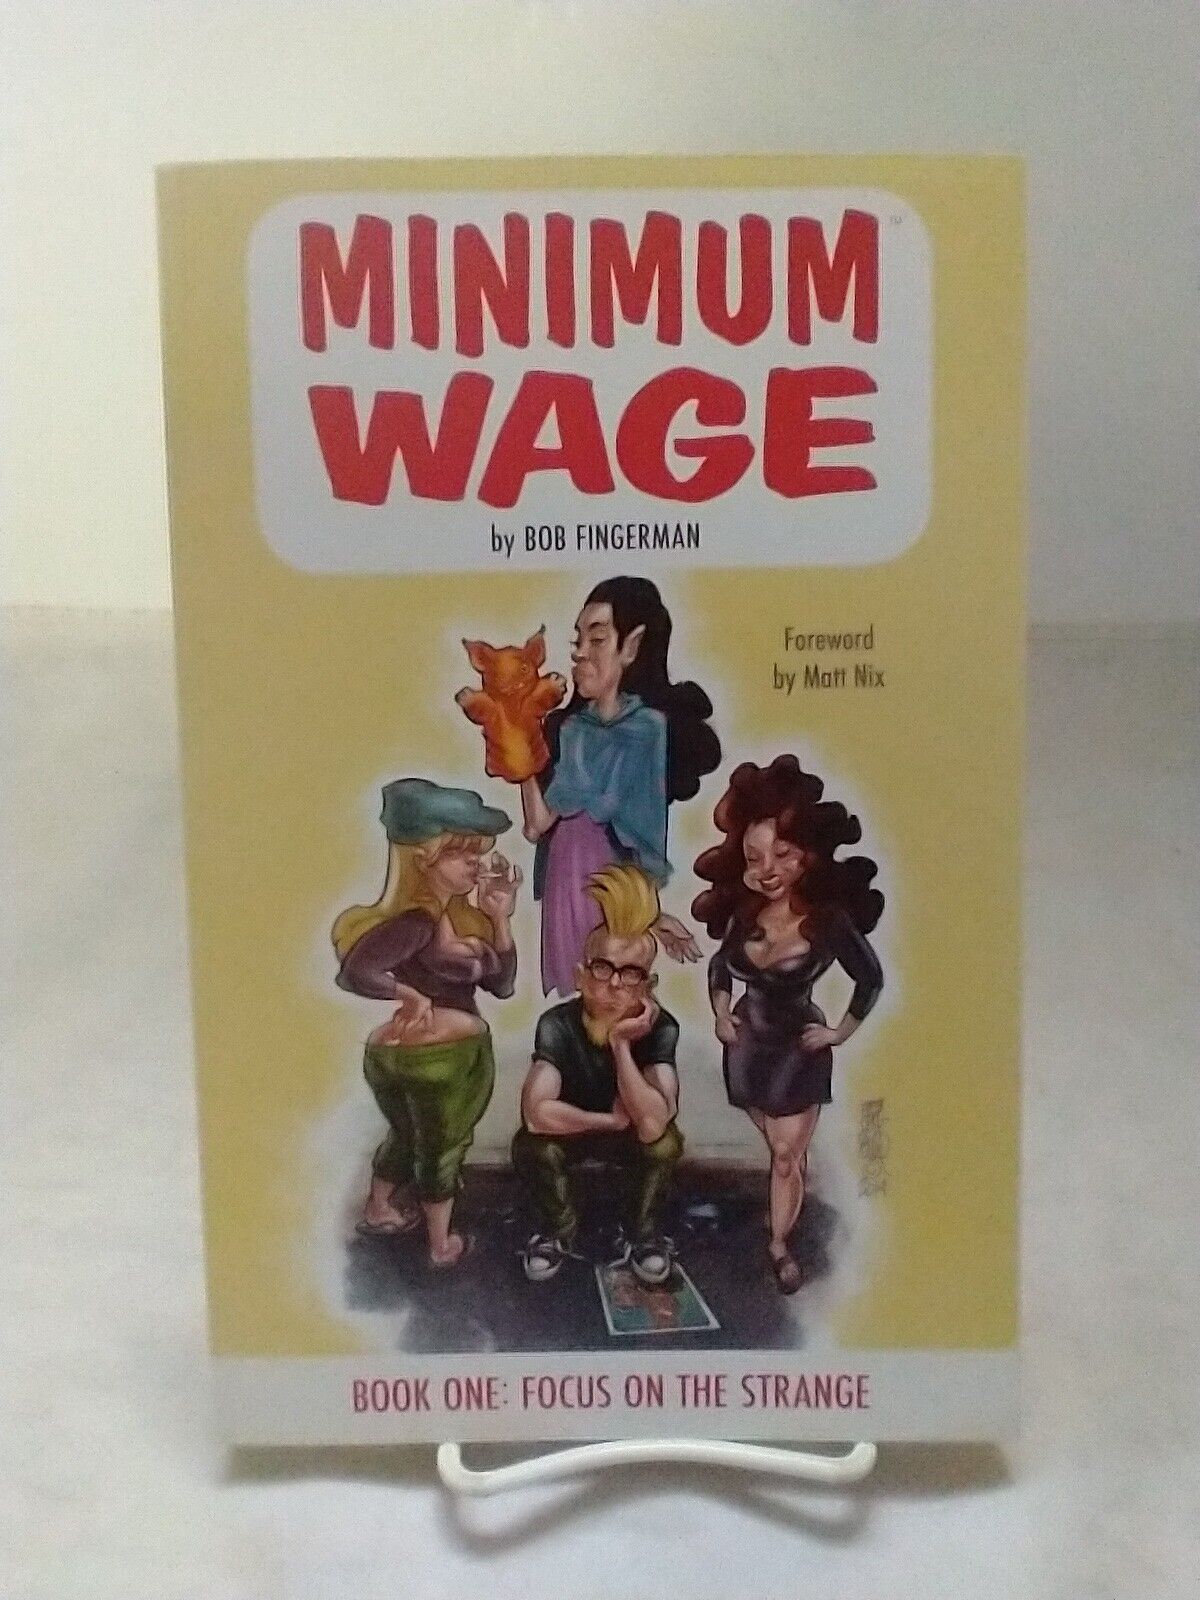 Minimum Wage Volume 1: Focus on the Strange by Bob Fingerman Trade Paperback